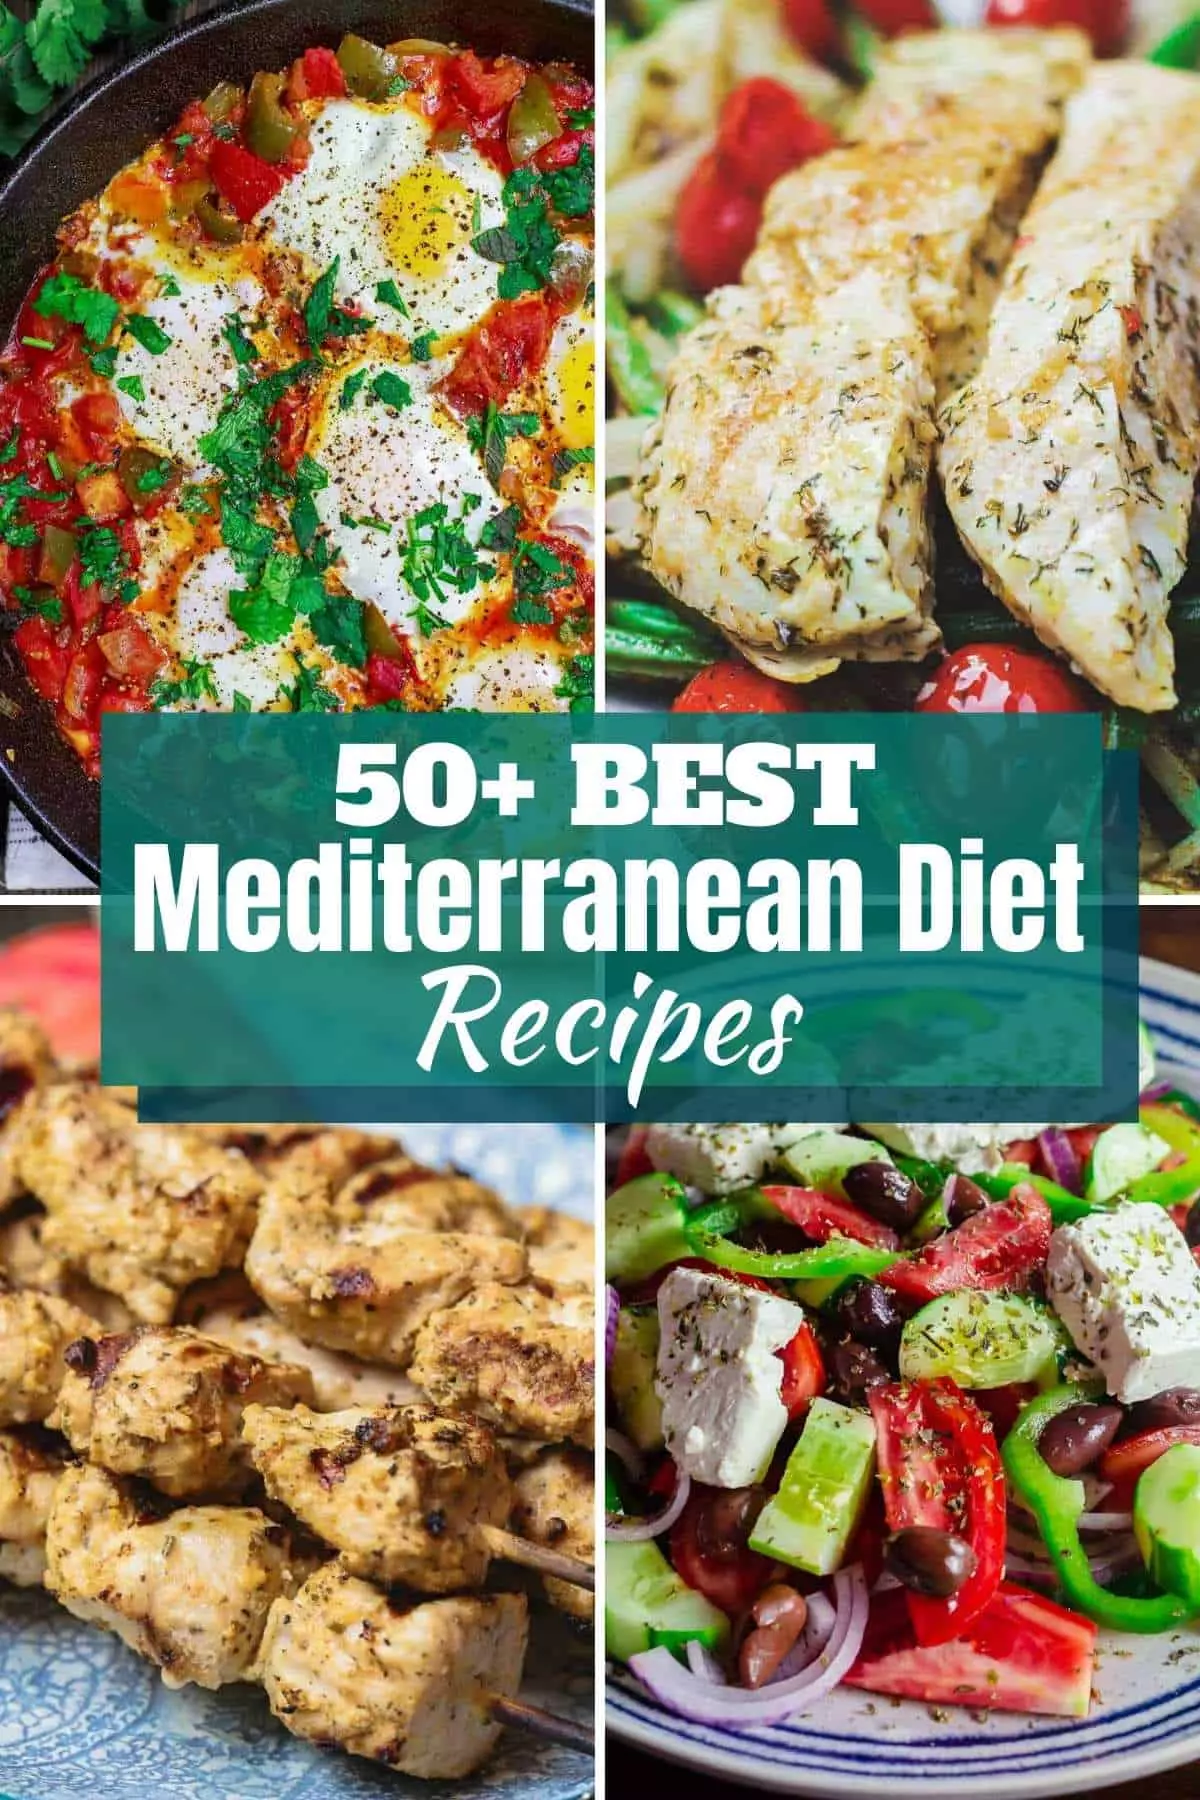 Mediterranean Sheet Pan Baked Eggs and Vegetables